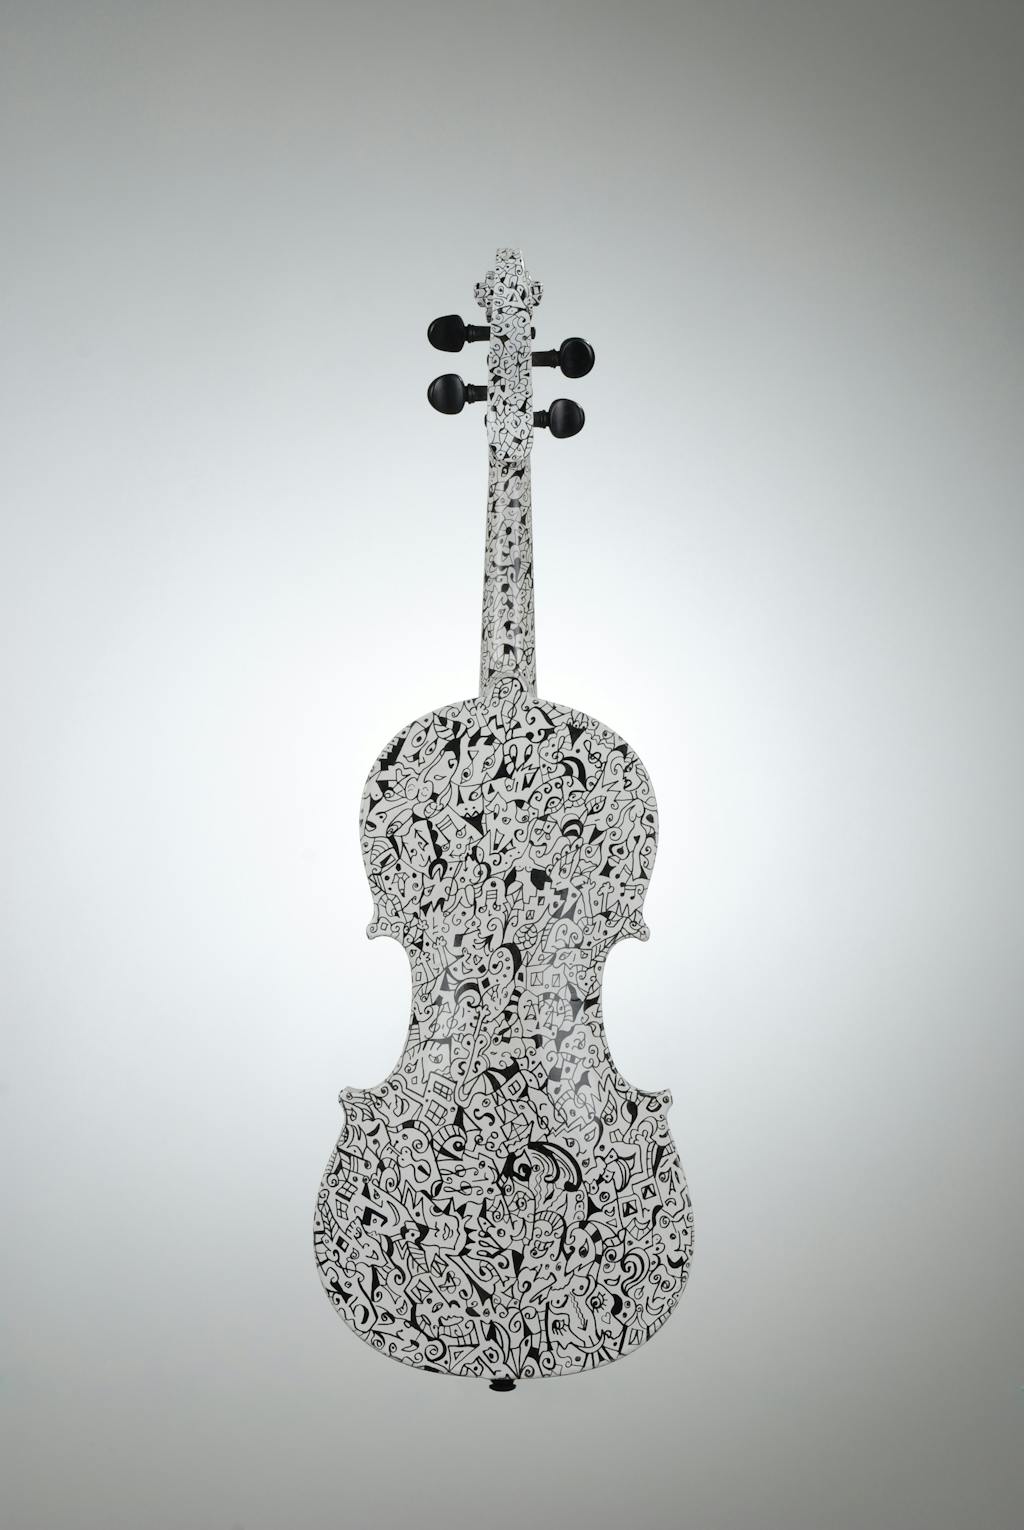 Violin "Winter", painted by Elena Birkenwald in 2005